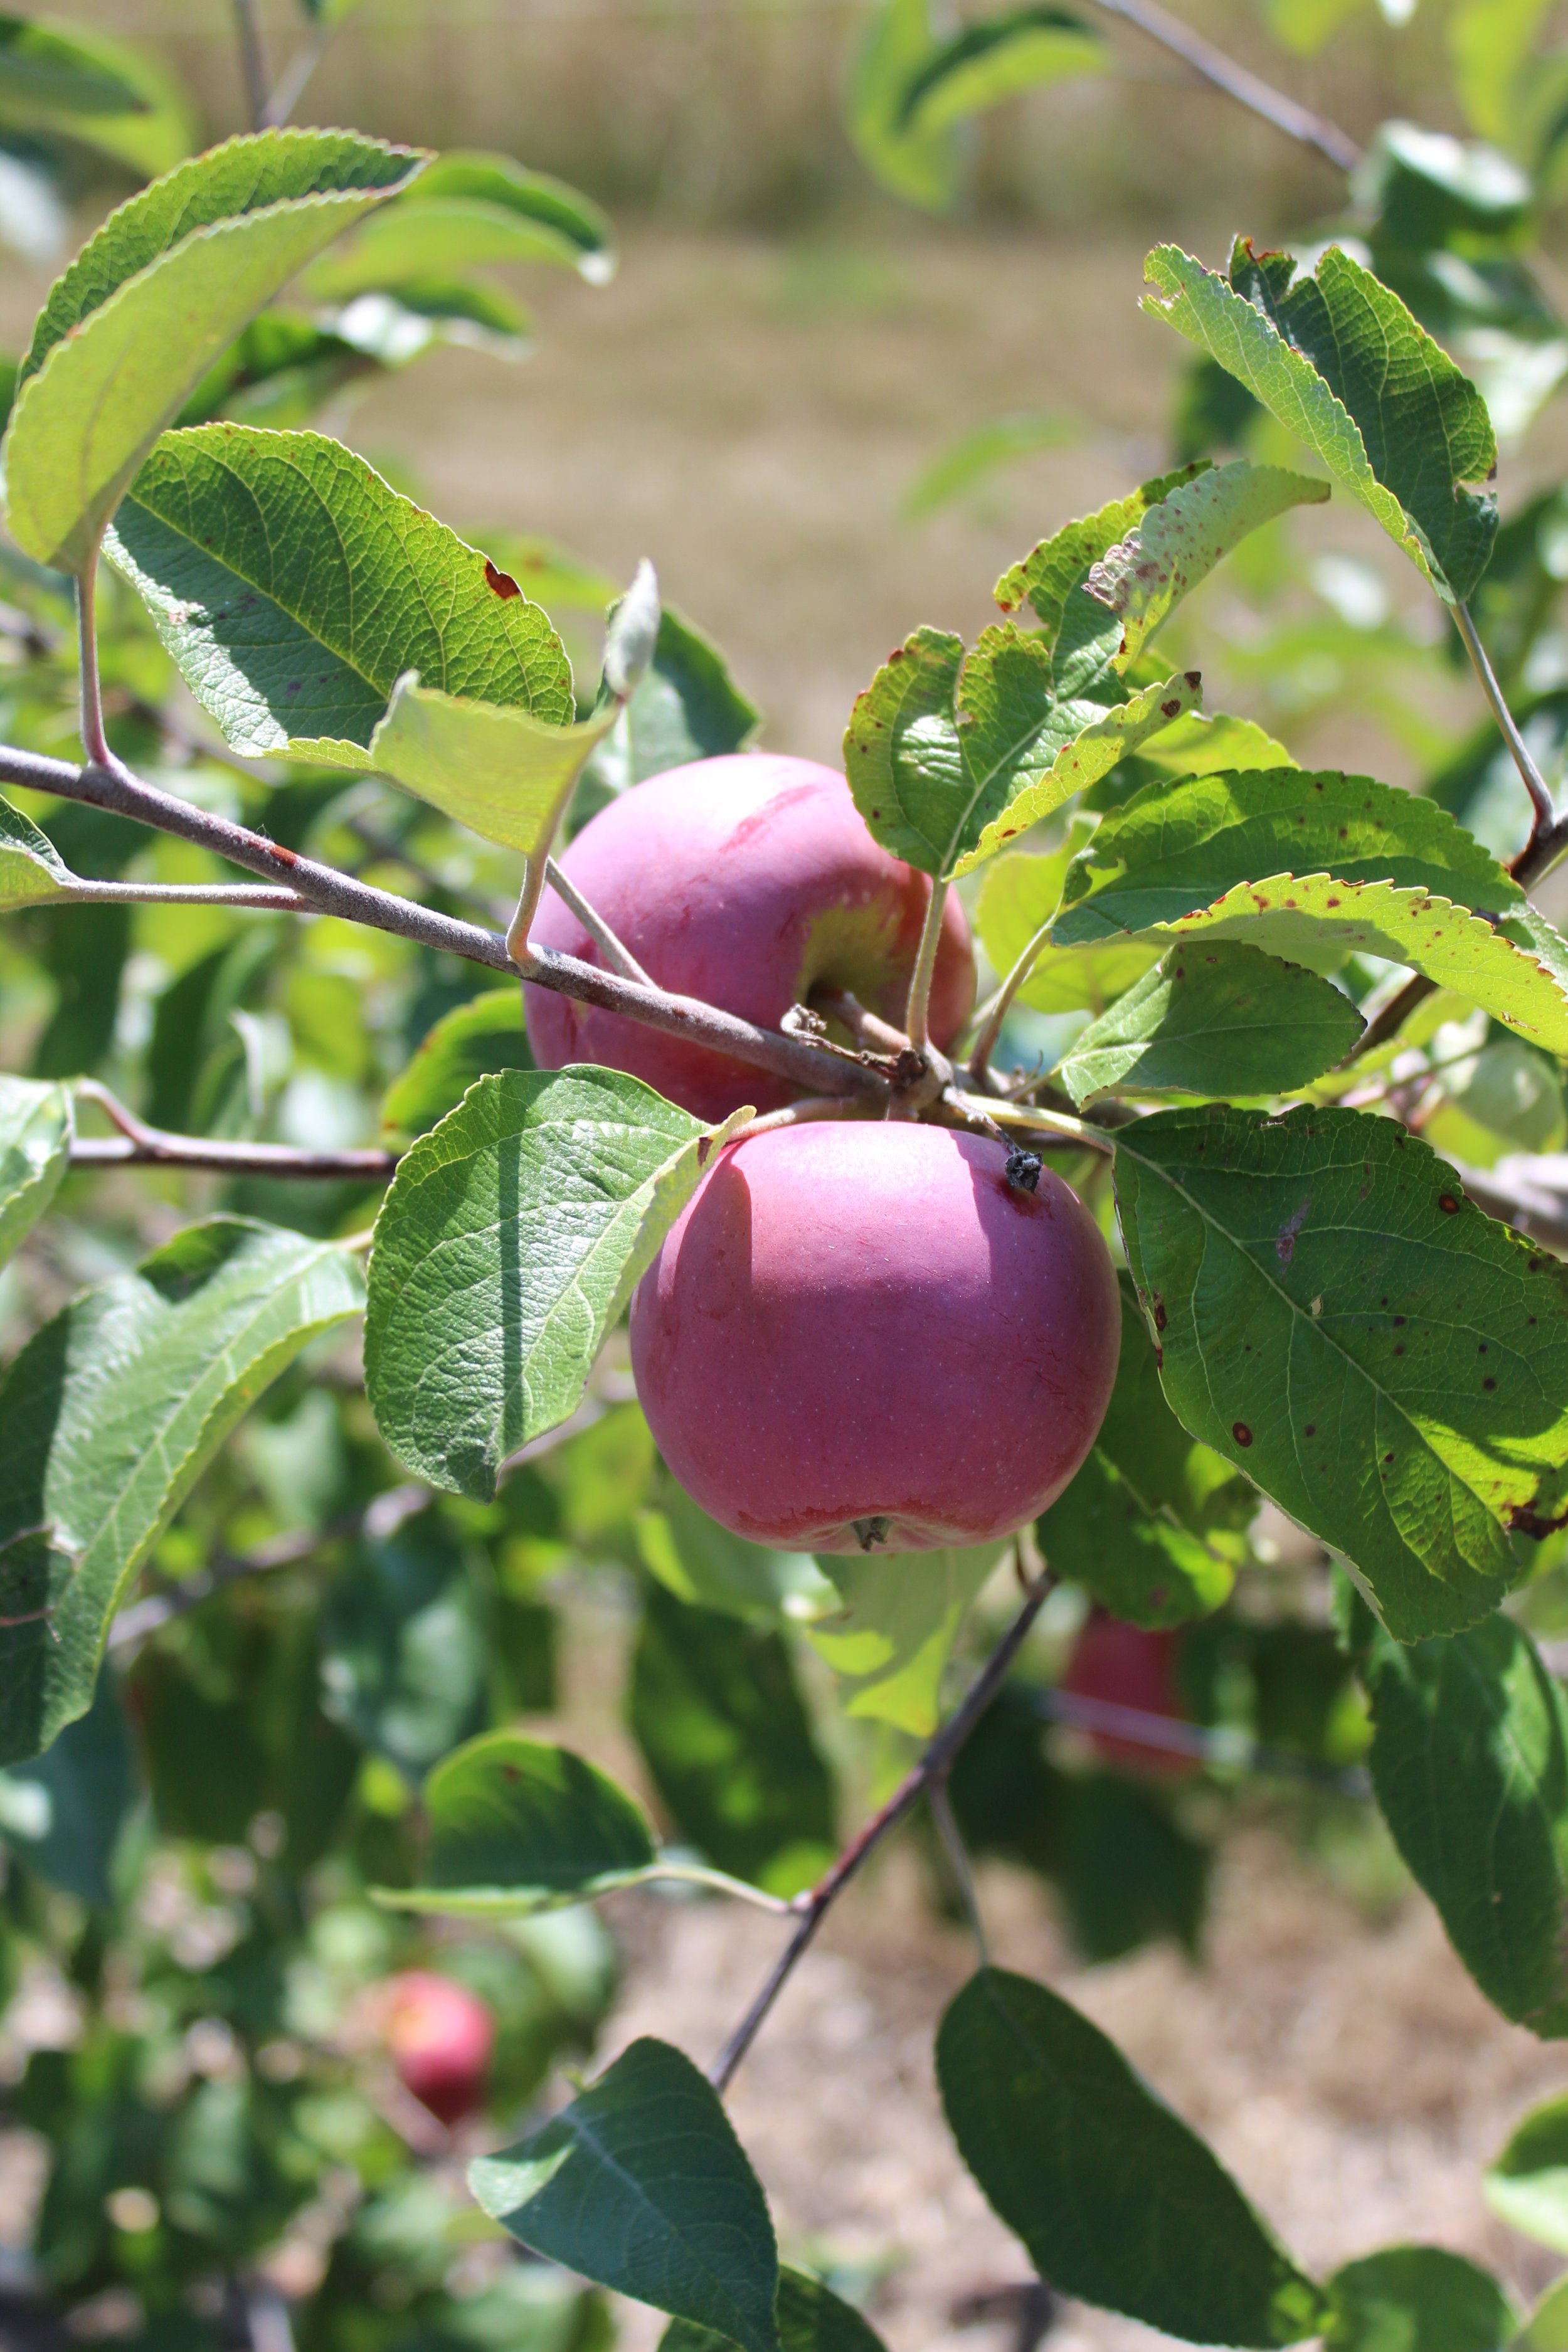 Farm Fresh Honeycrisp Apples - The Egg Drop